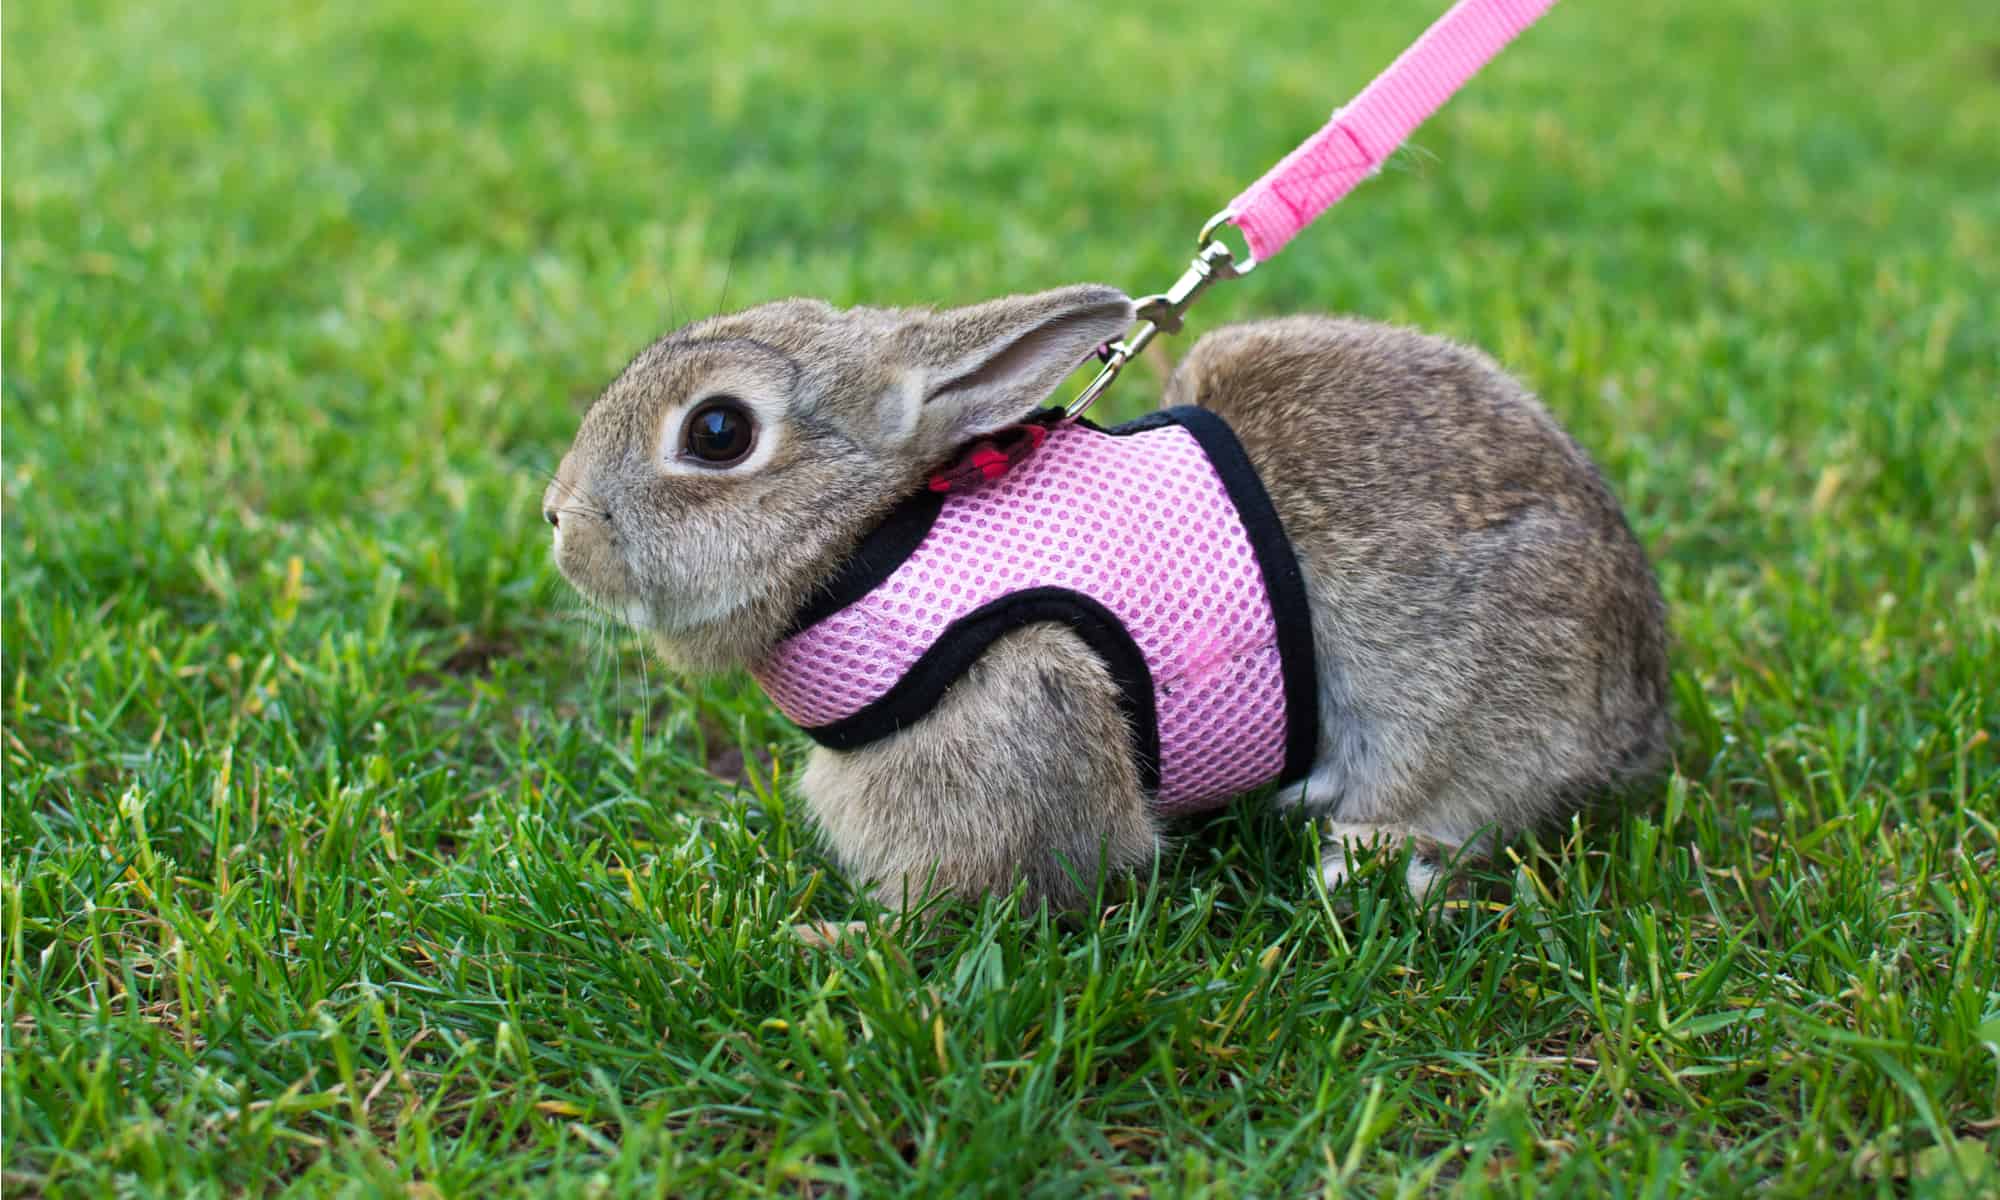 UEETEK Rabbit Harness and Lead Set for Rabbits Soft Harness with Lead for Rabbits Bunny Medium Red